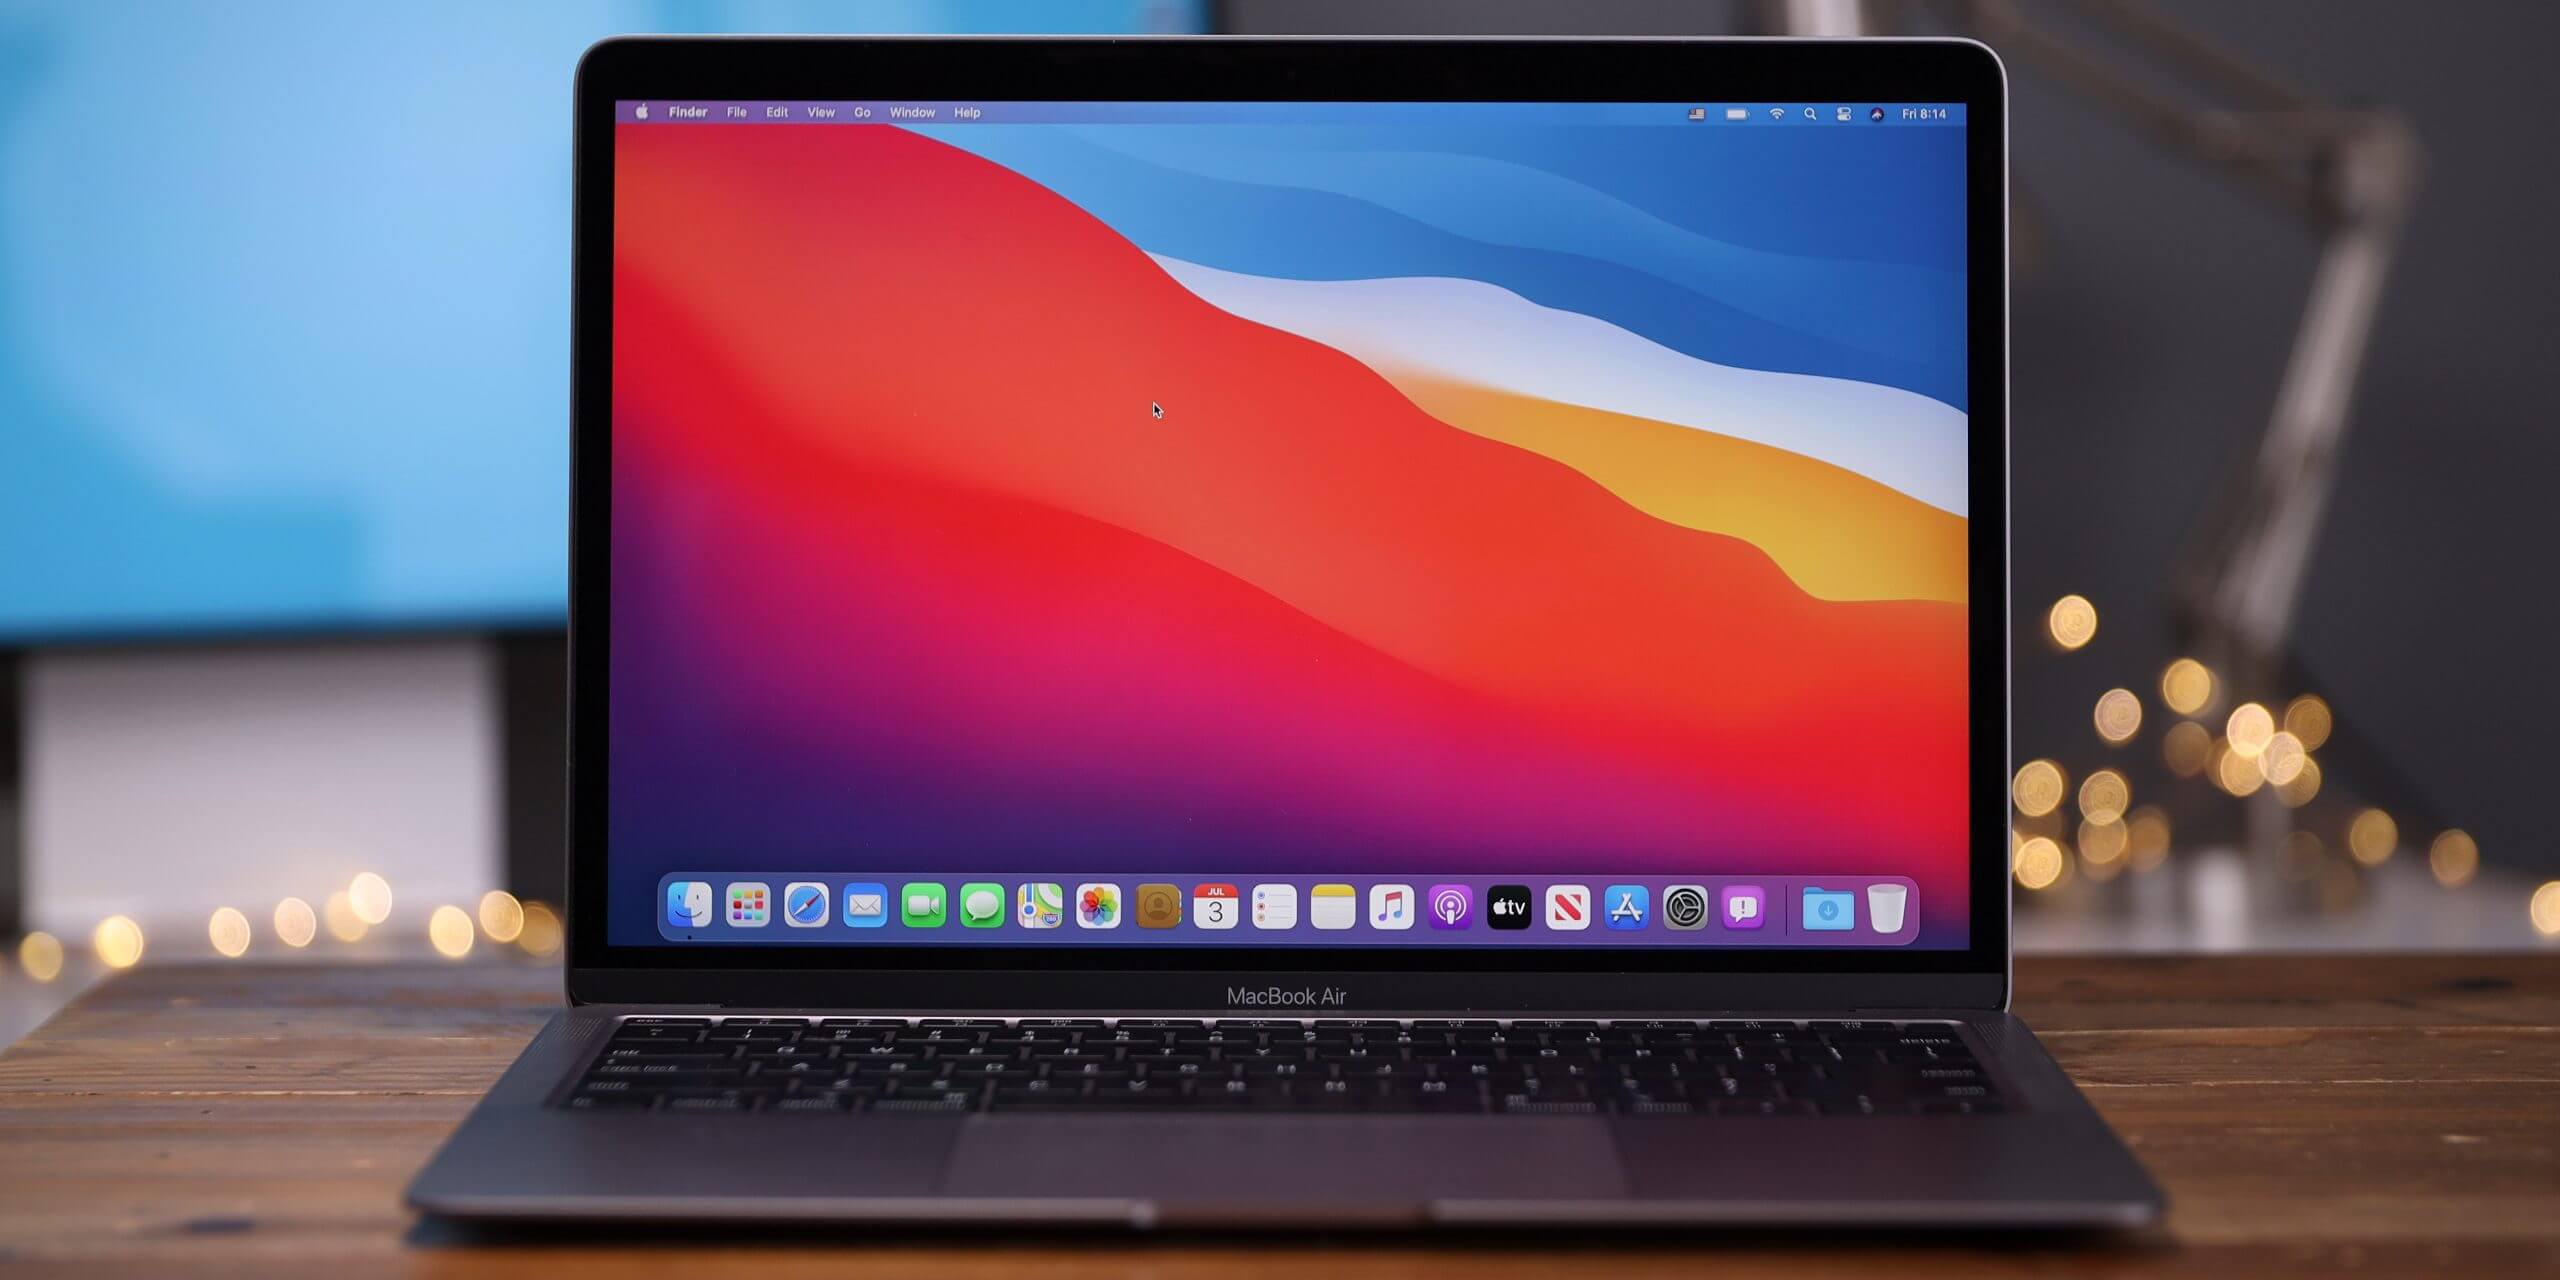 Дата выхода macOS Big Sur объявлена ​​на мероприятии Apple в ноябре